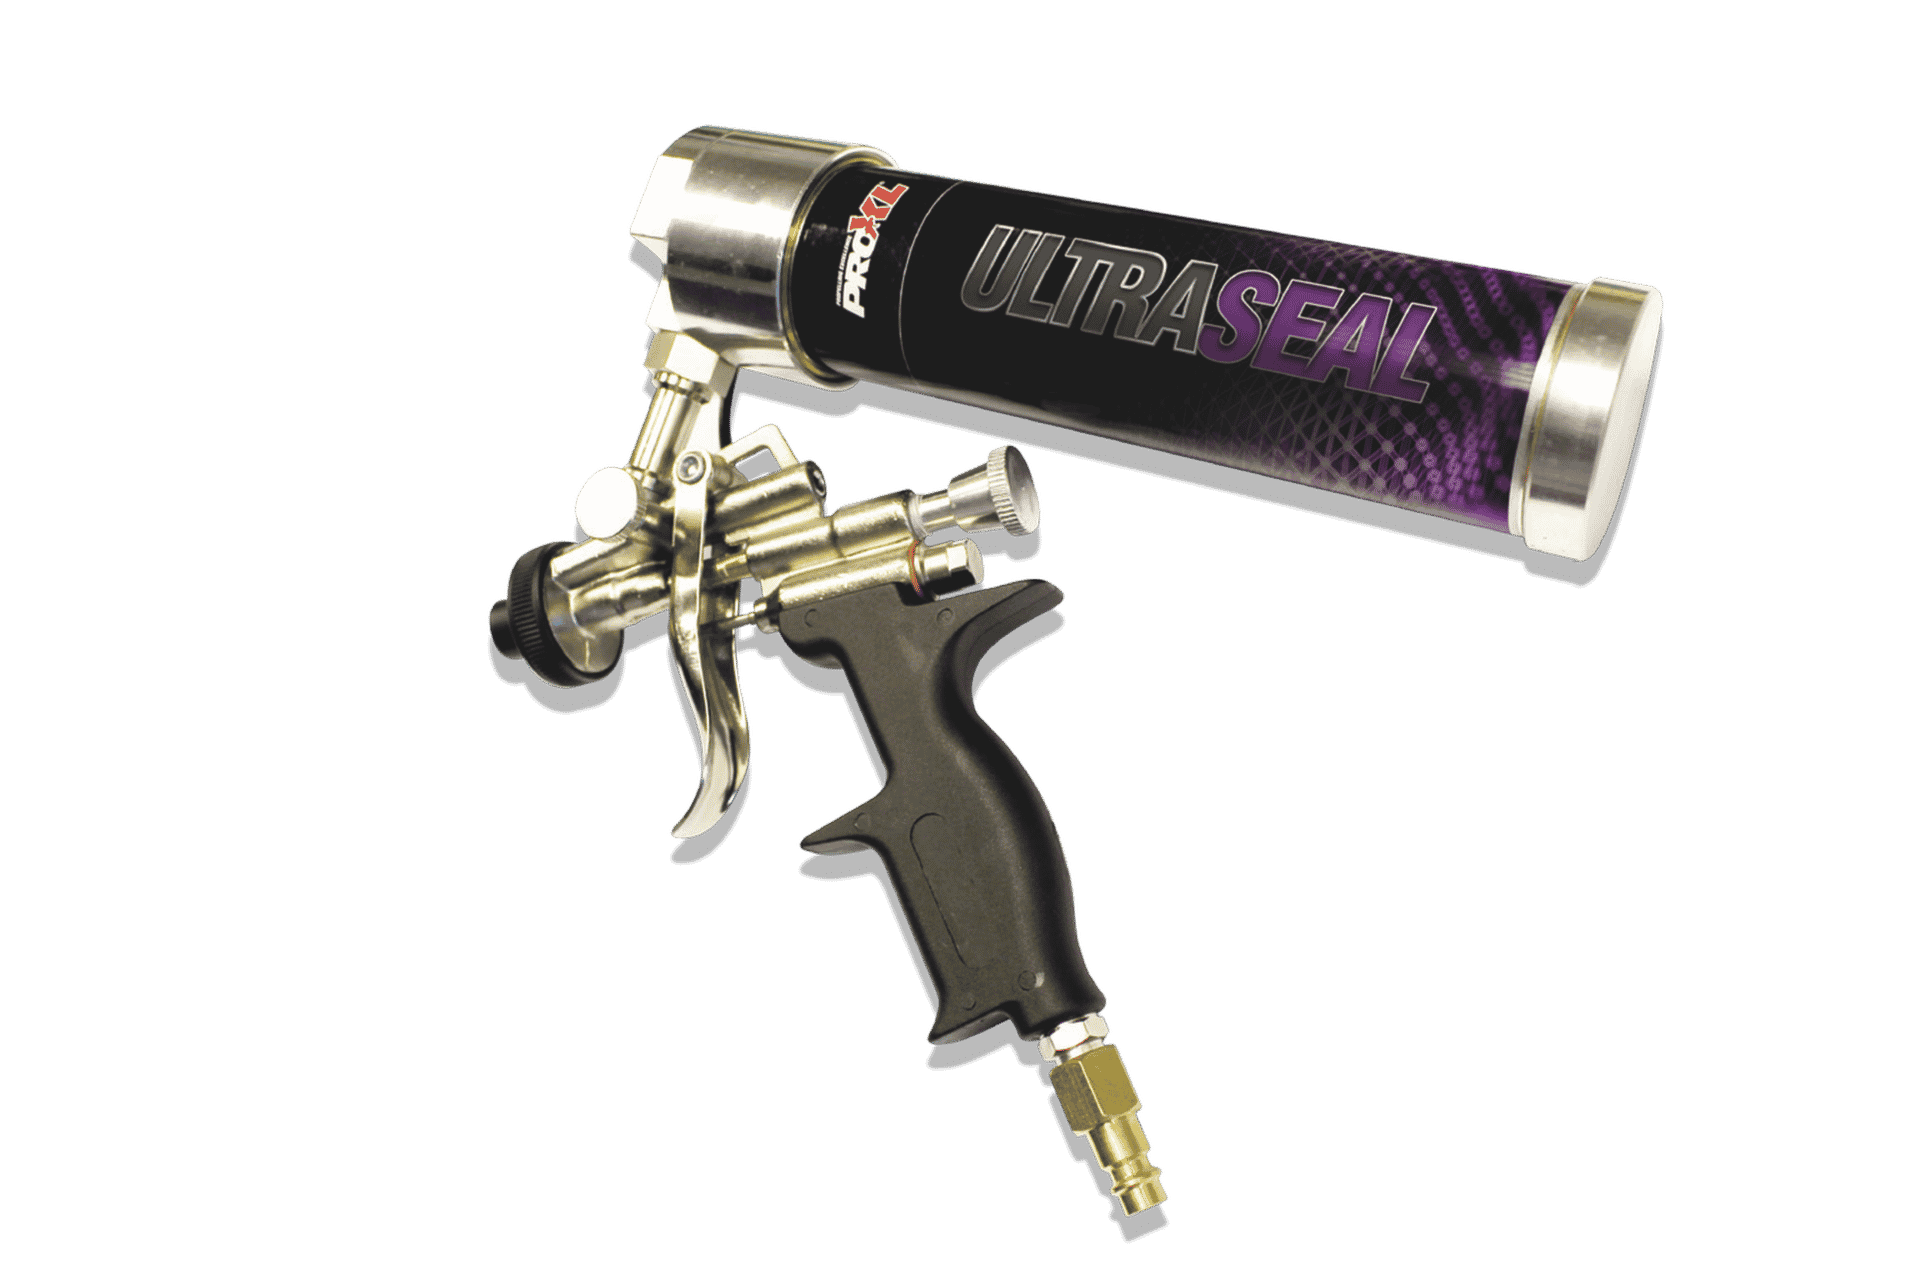 Sprayable Sealer Gun Product Image